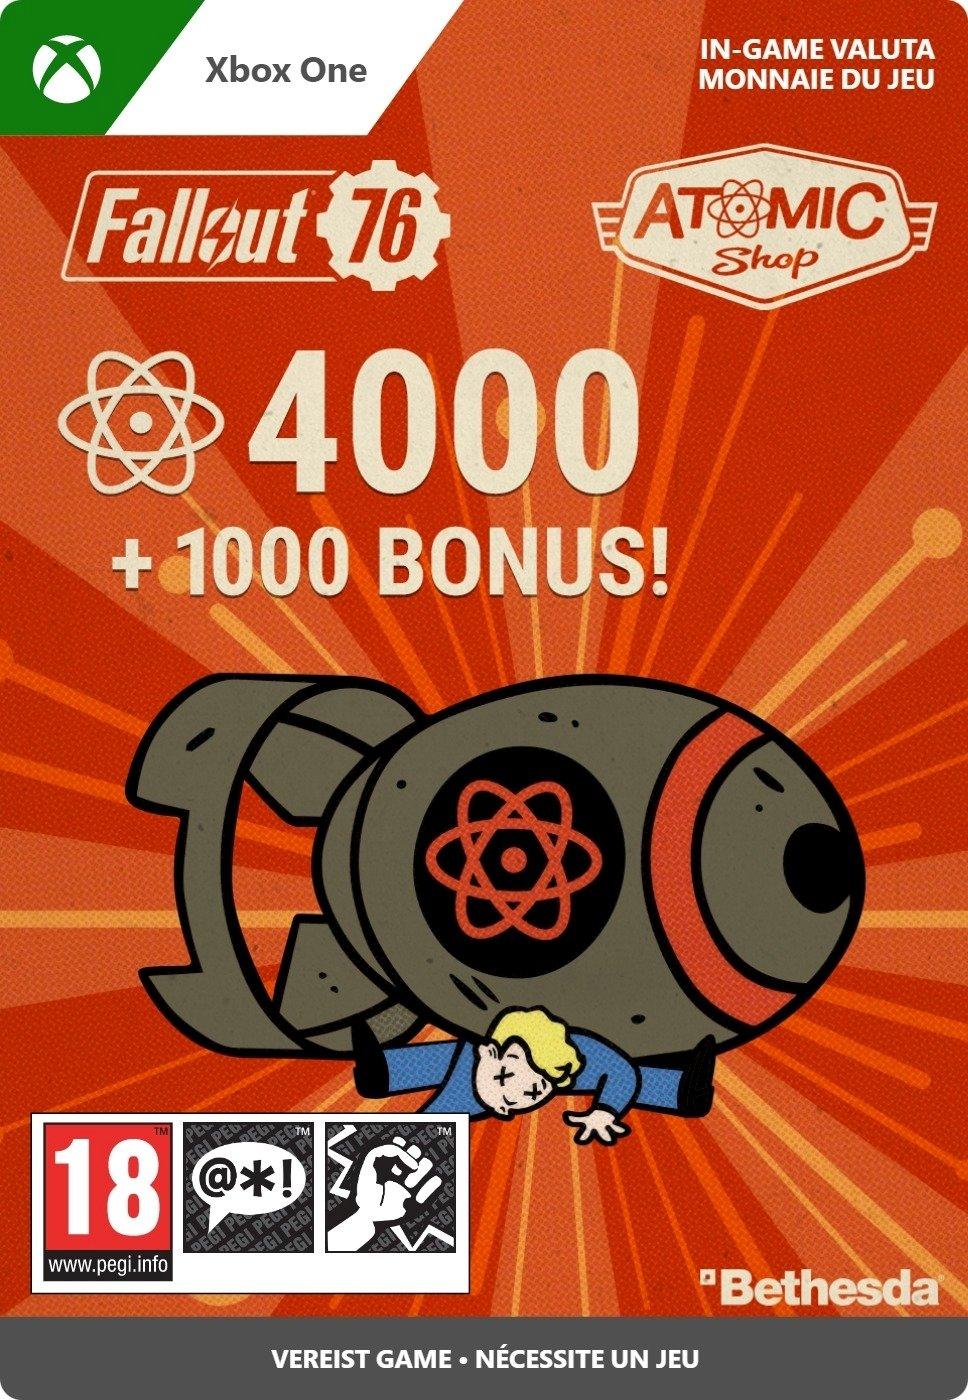 Fallout 76: 4000 (+1000 Bonus) Atoms - Xbox One - Currency | 7LM-00053 (cfd6276d-09f6-4942-8bce-3d4e8ac1158d)